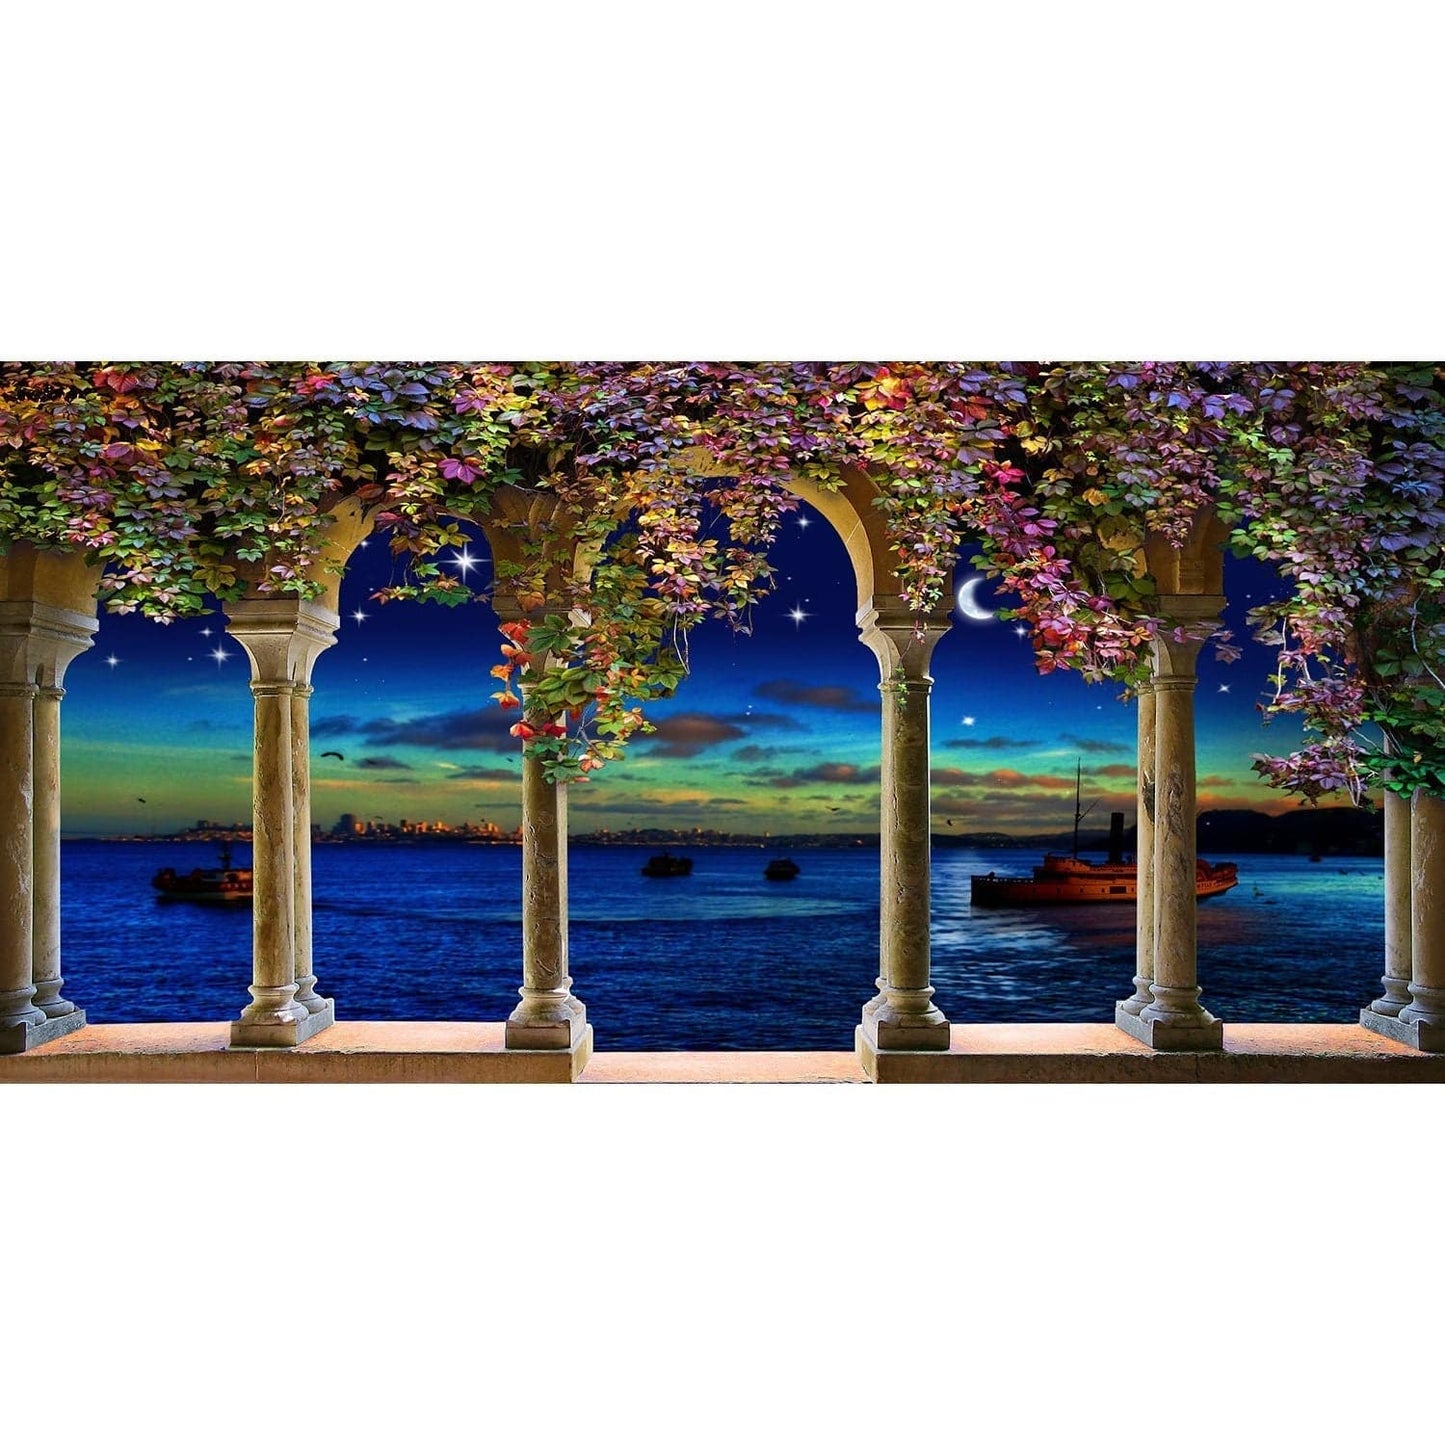 Wisteria Blooms on Columns Photo Backdrop - Pro 20  x 10  